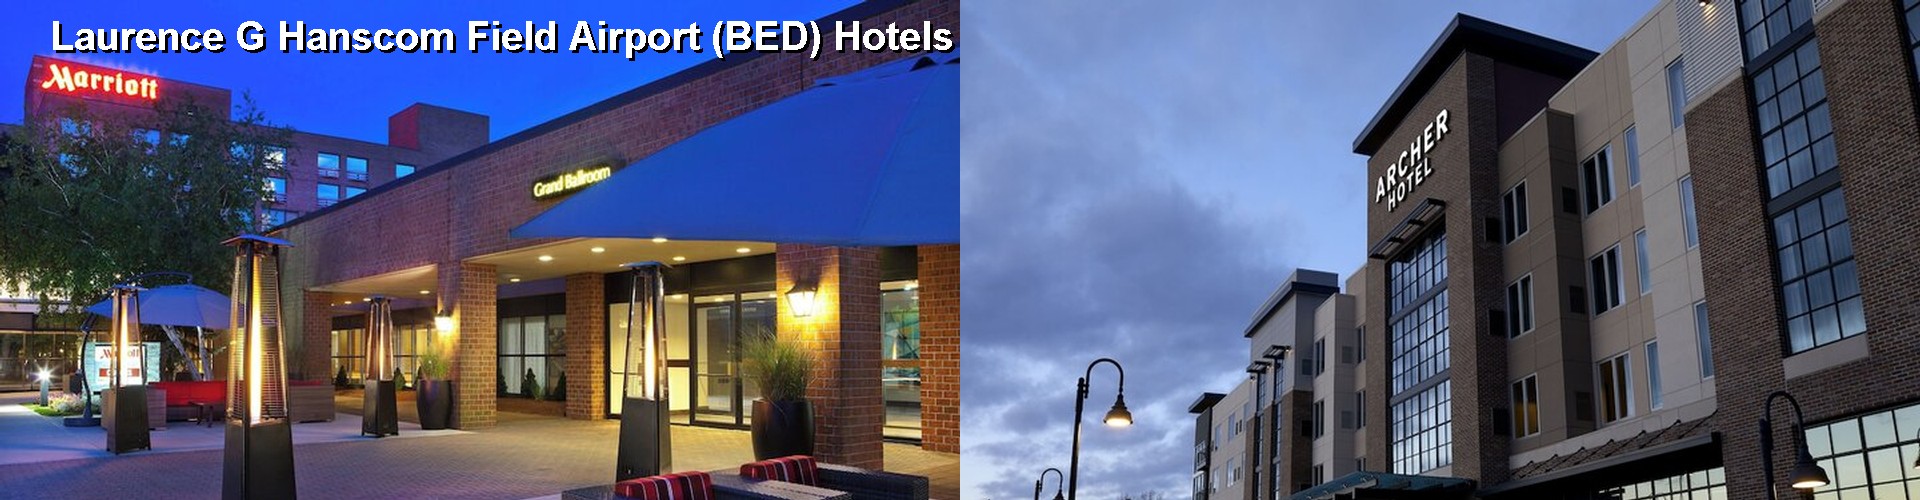 3 Best Hotels near Laurence G Hanscom Field Airport (BED)